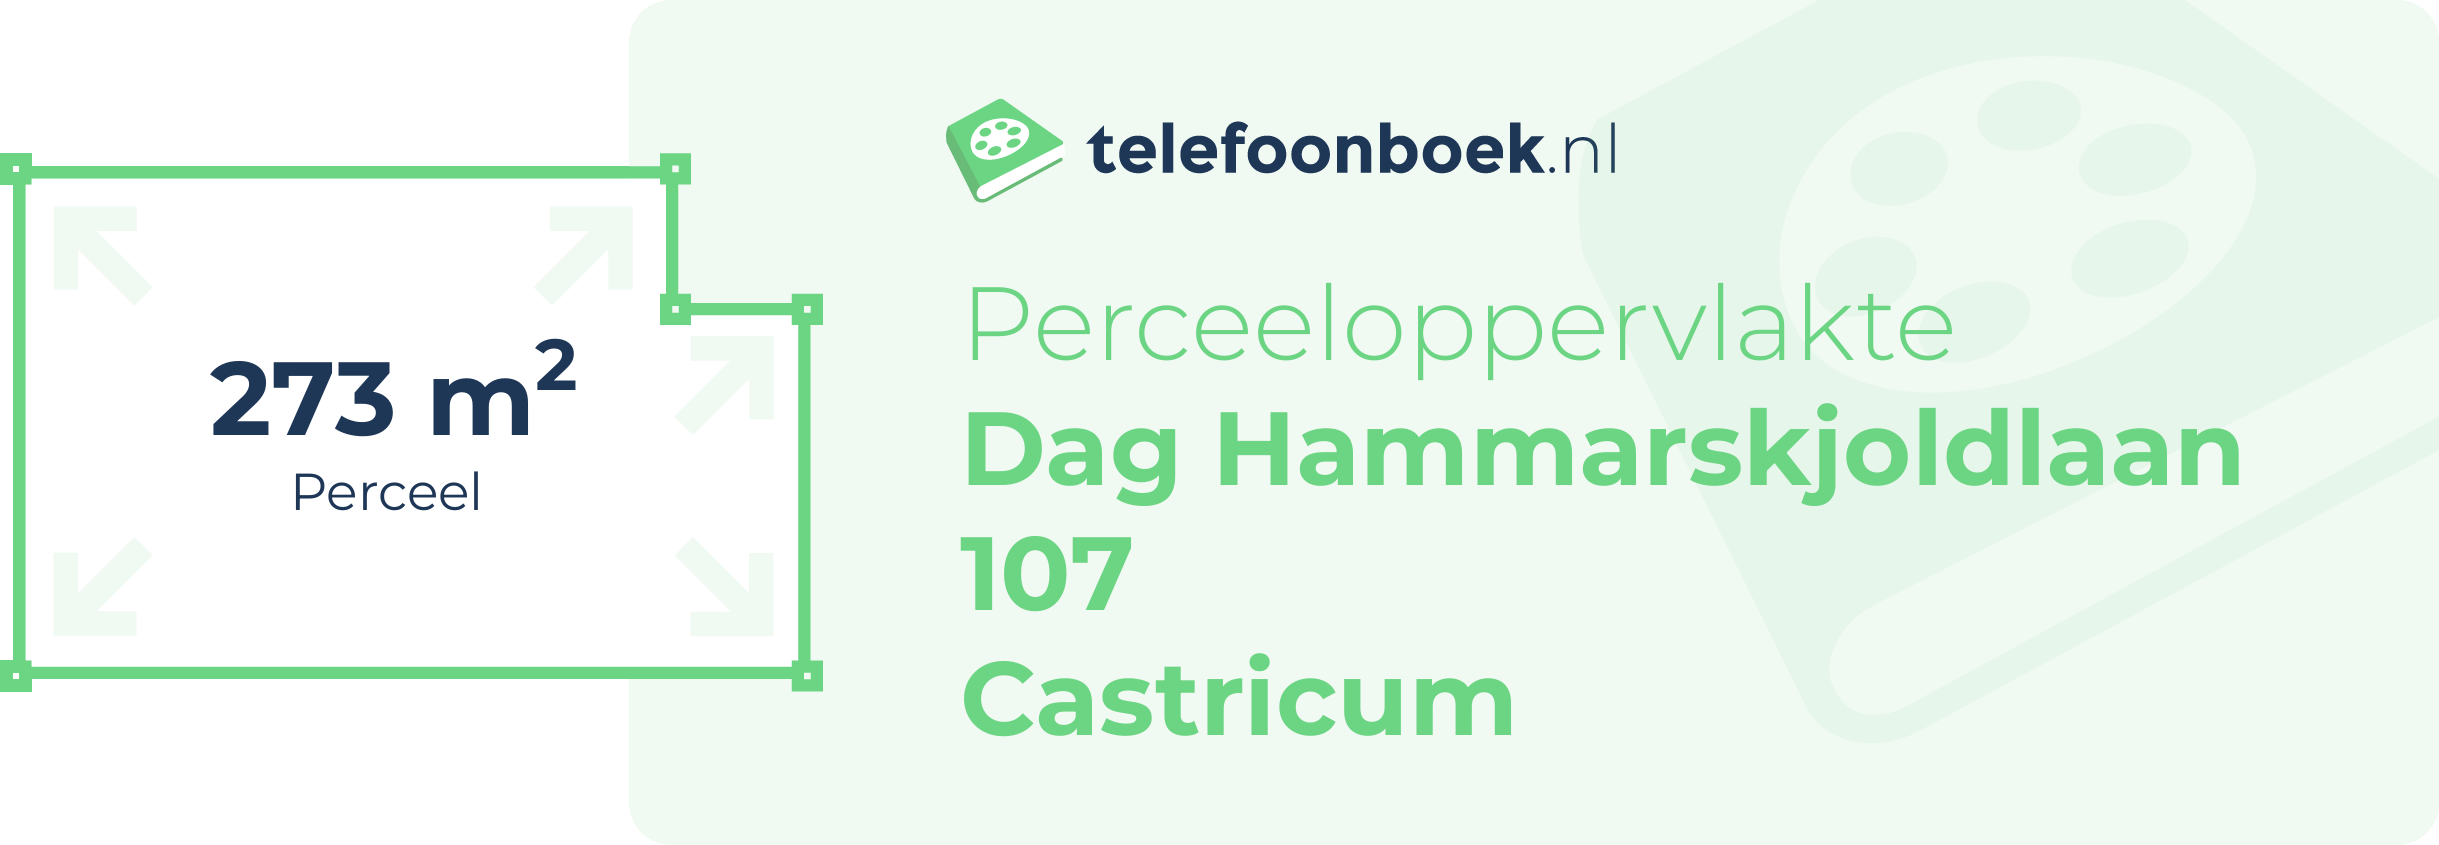 Perceeloppervlakte Dag Hammarskjoldlaan 107 Castricum